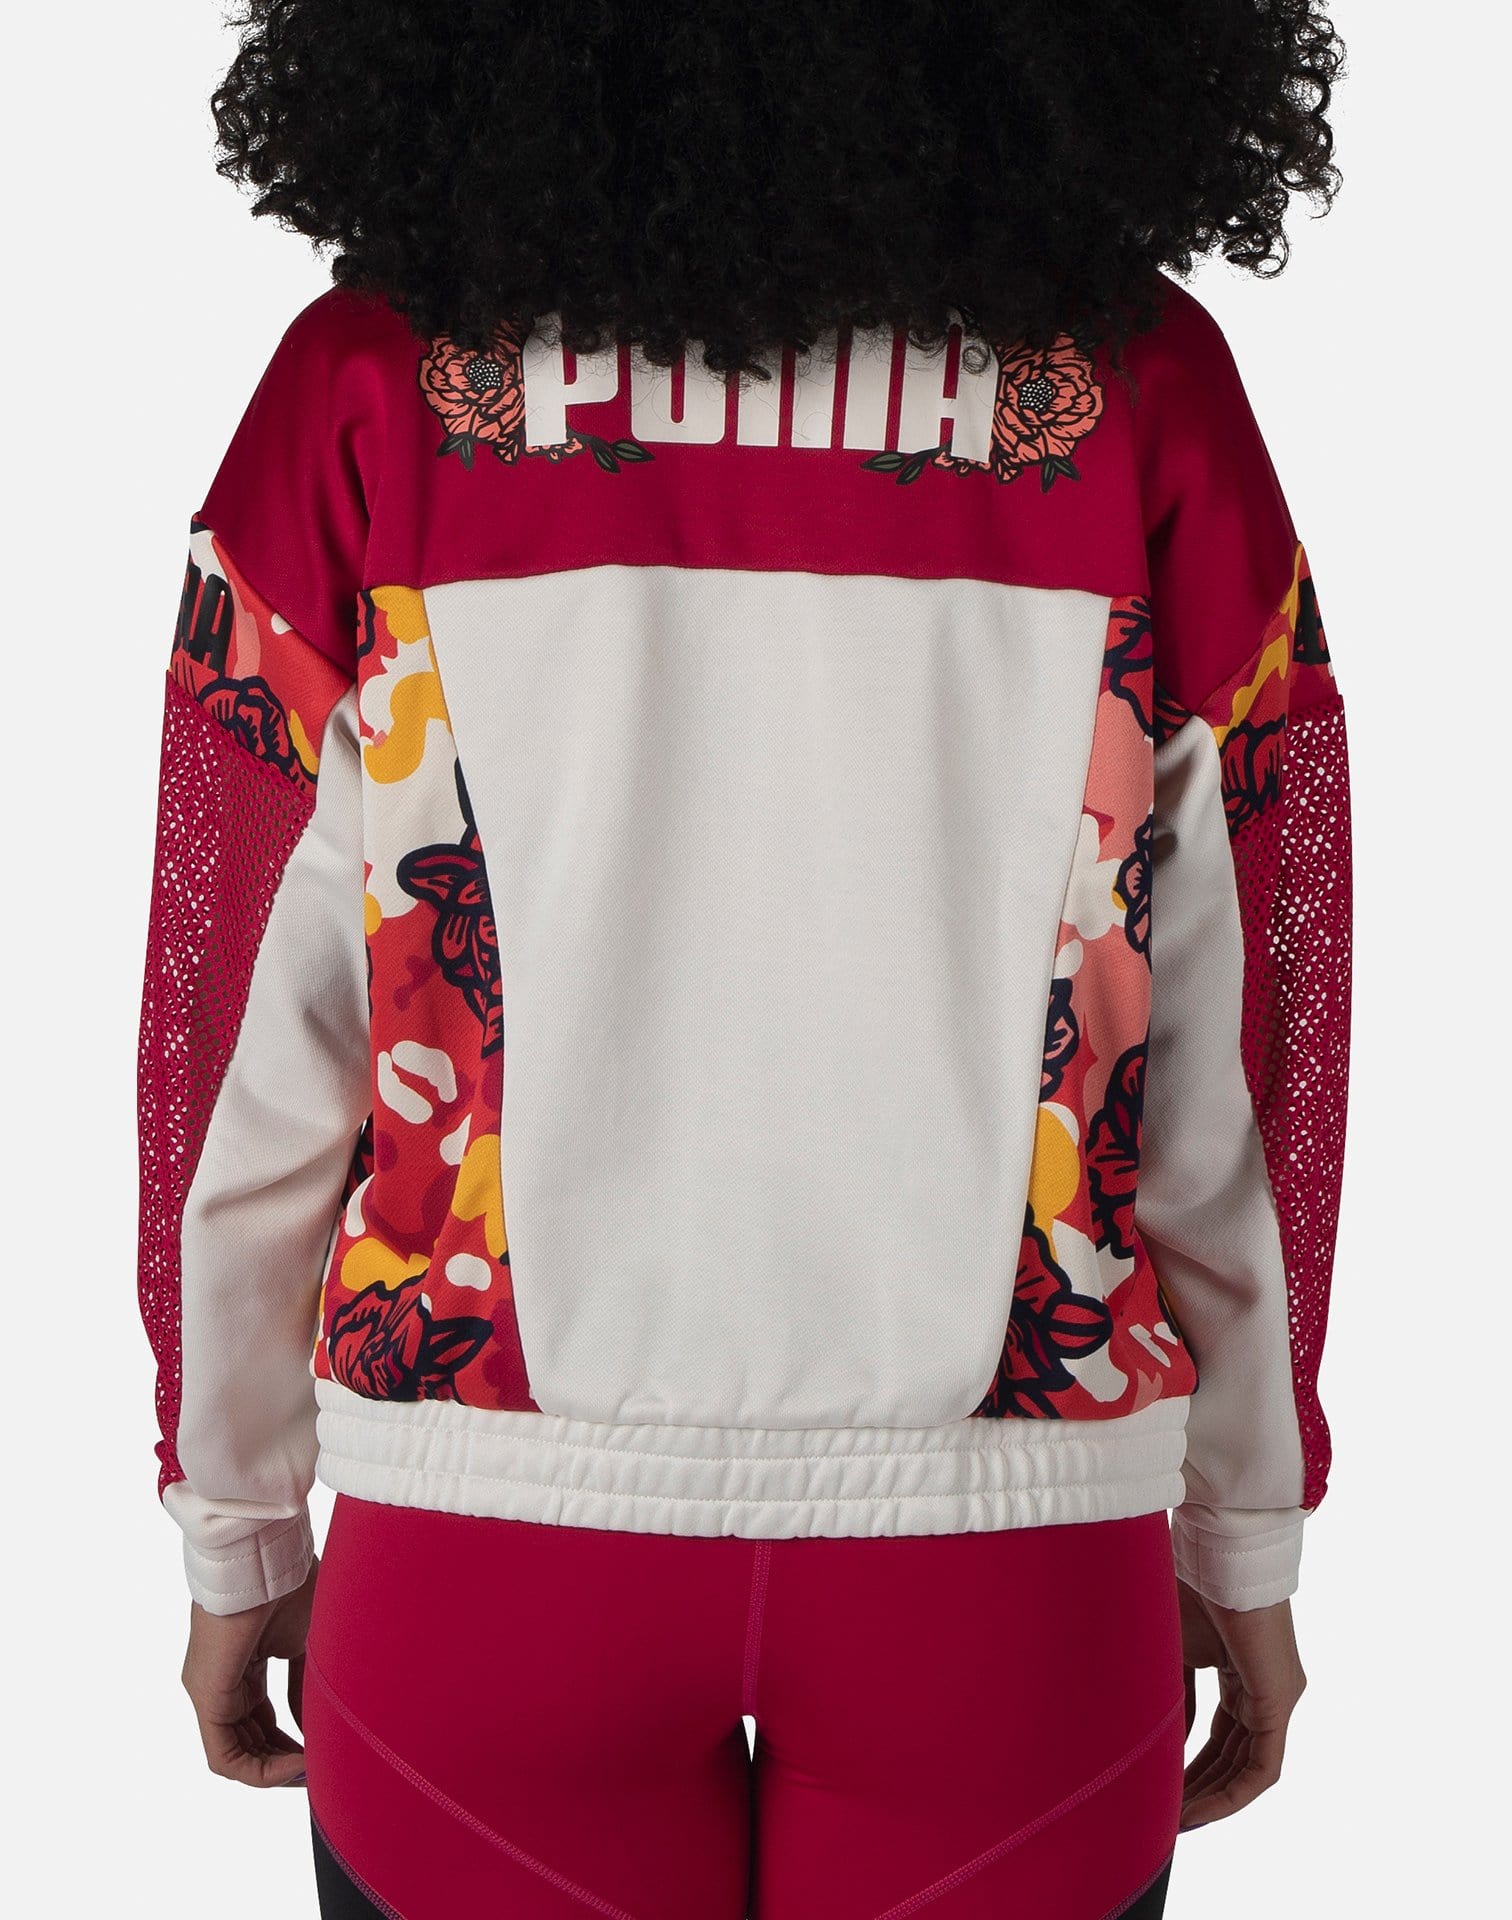 PUMA Women's Flourish XTG Jacket